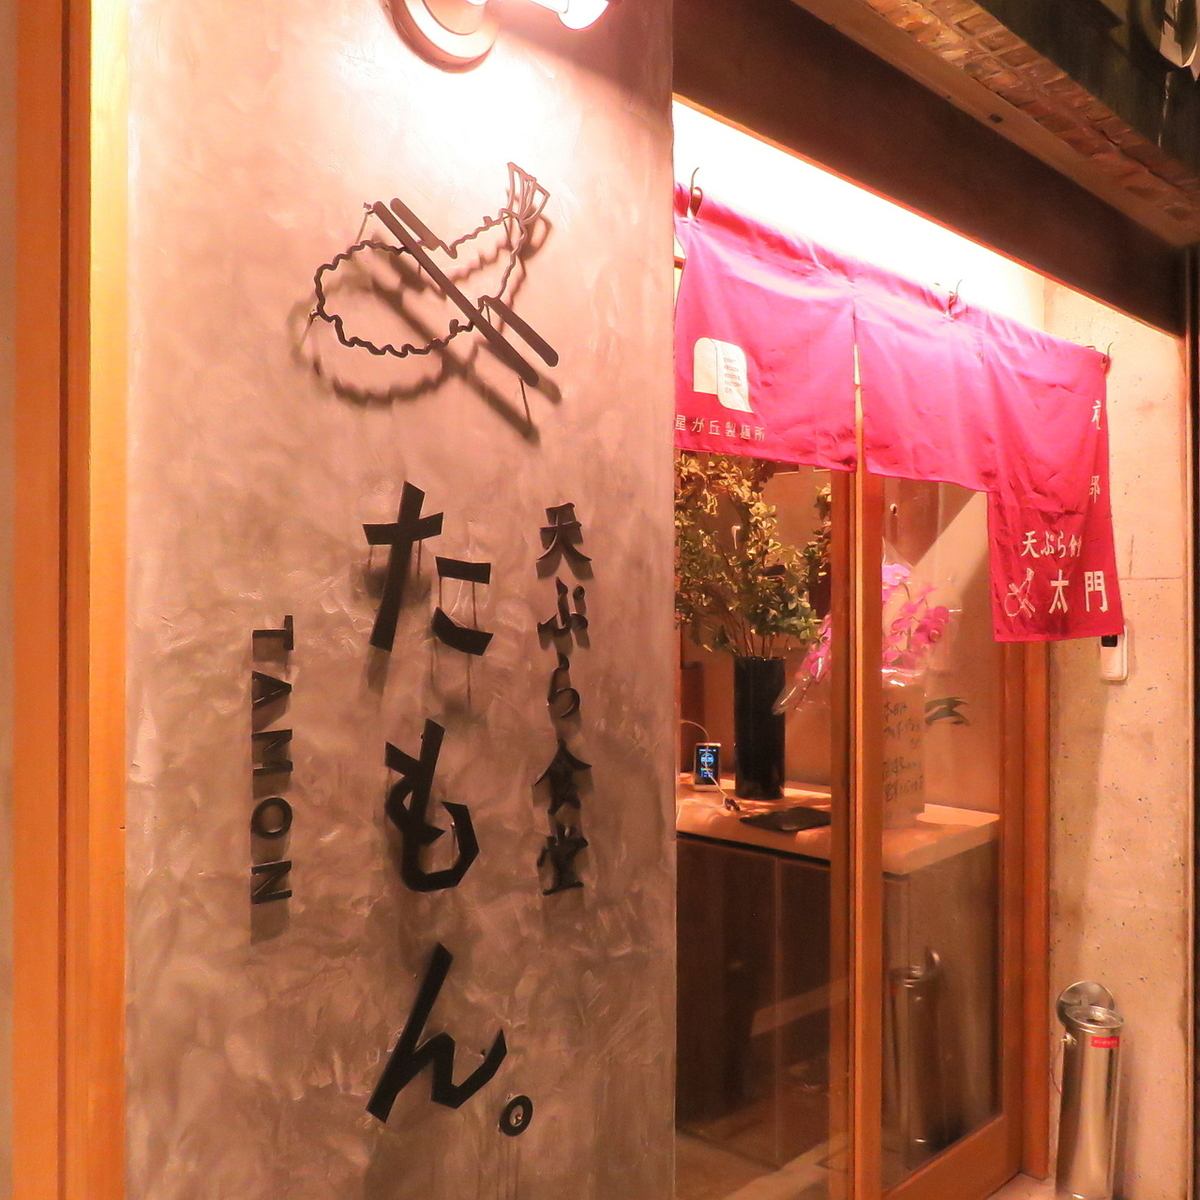 A 5-minute walk from Imaike Station! A reasonable tempura bar where you can enjoy tempura and bubbles♪